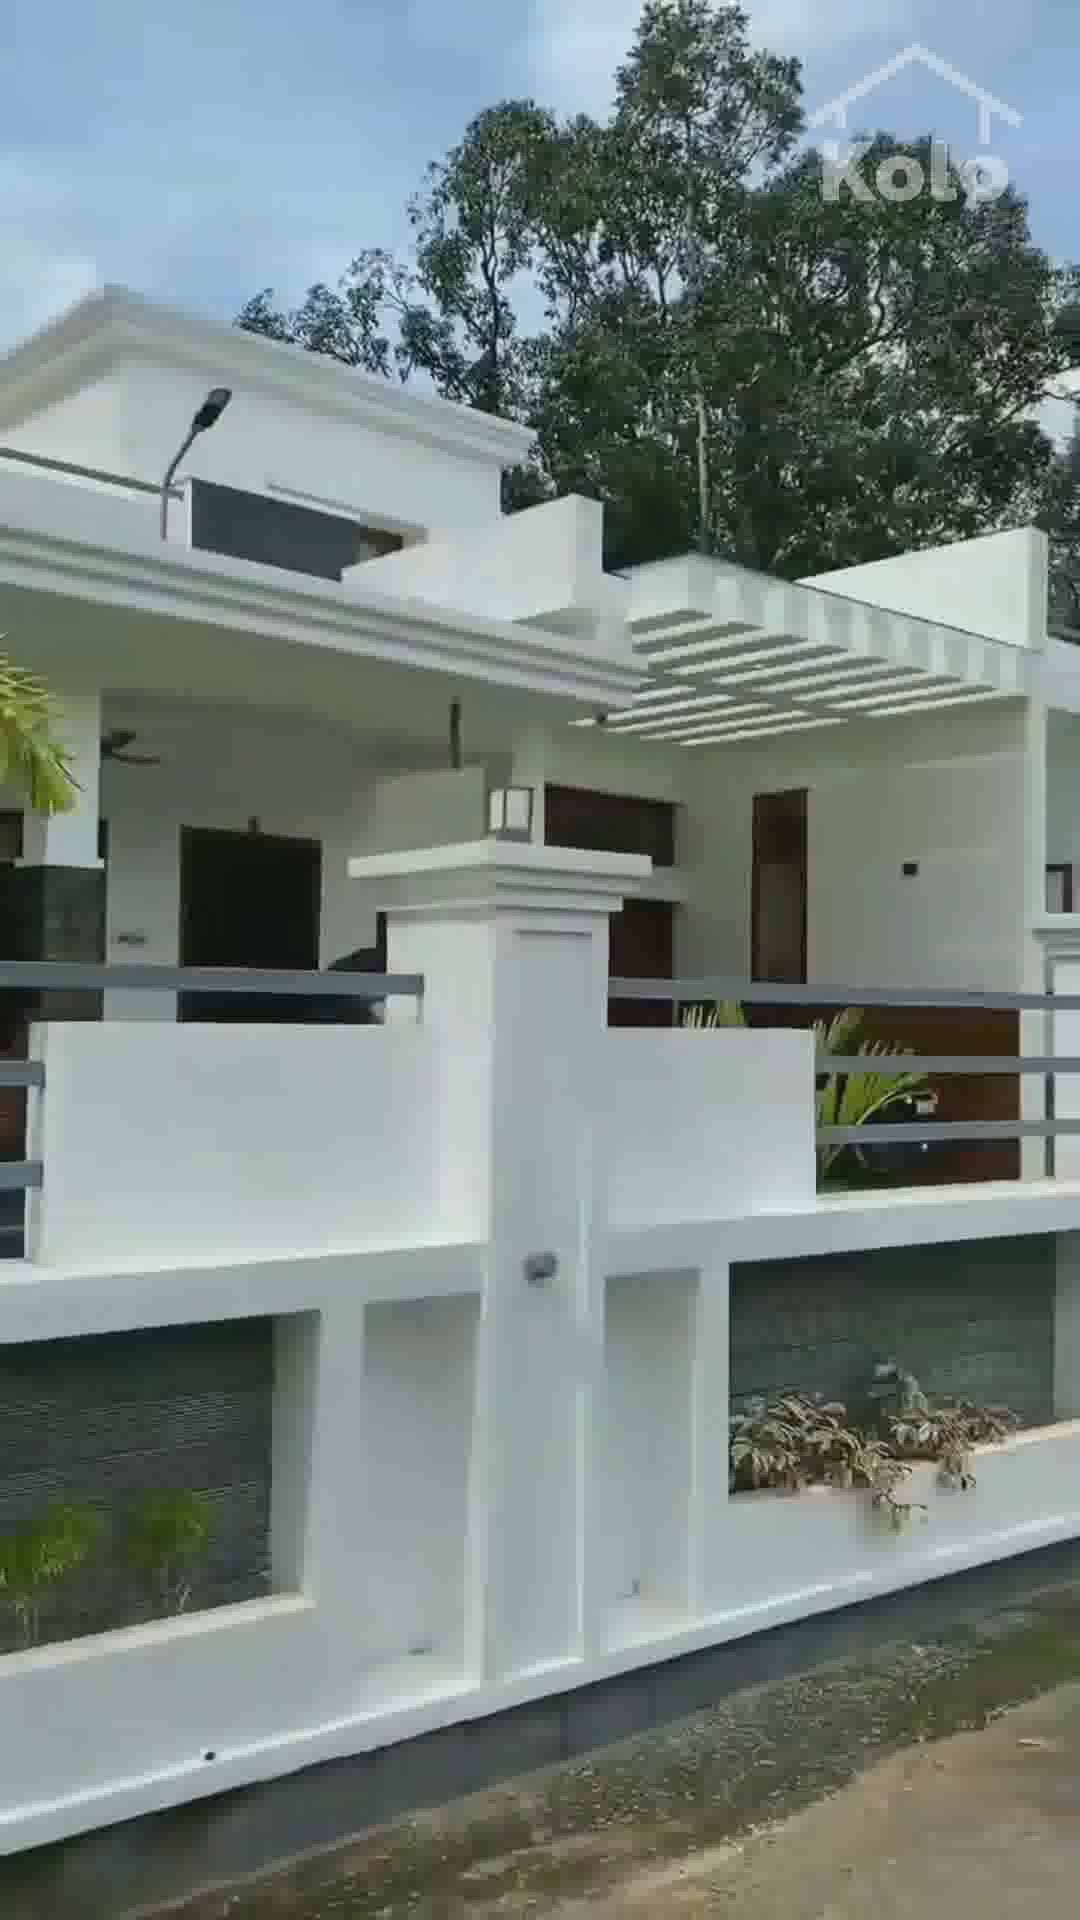 Project by @stria_architects | Breezy and Balanced

Client: Mr. Viju
Location: Pathanamthitta

Design: STRIa aRCHITECTS
@stria_architects
Founded by @arsreekumar & @ankitaindukumar